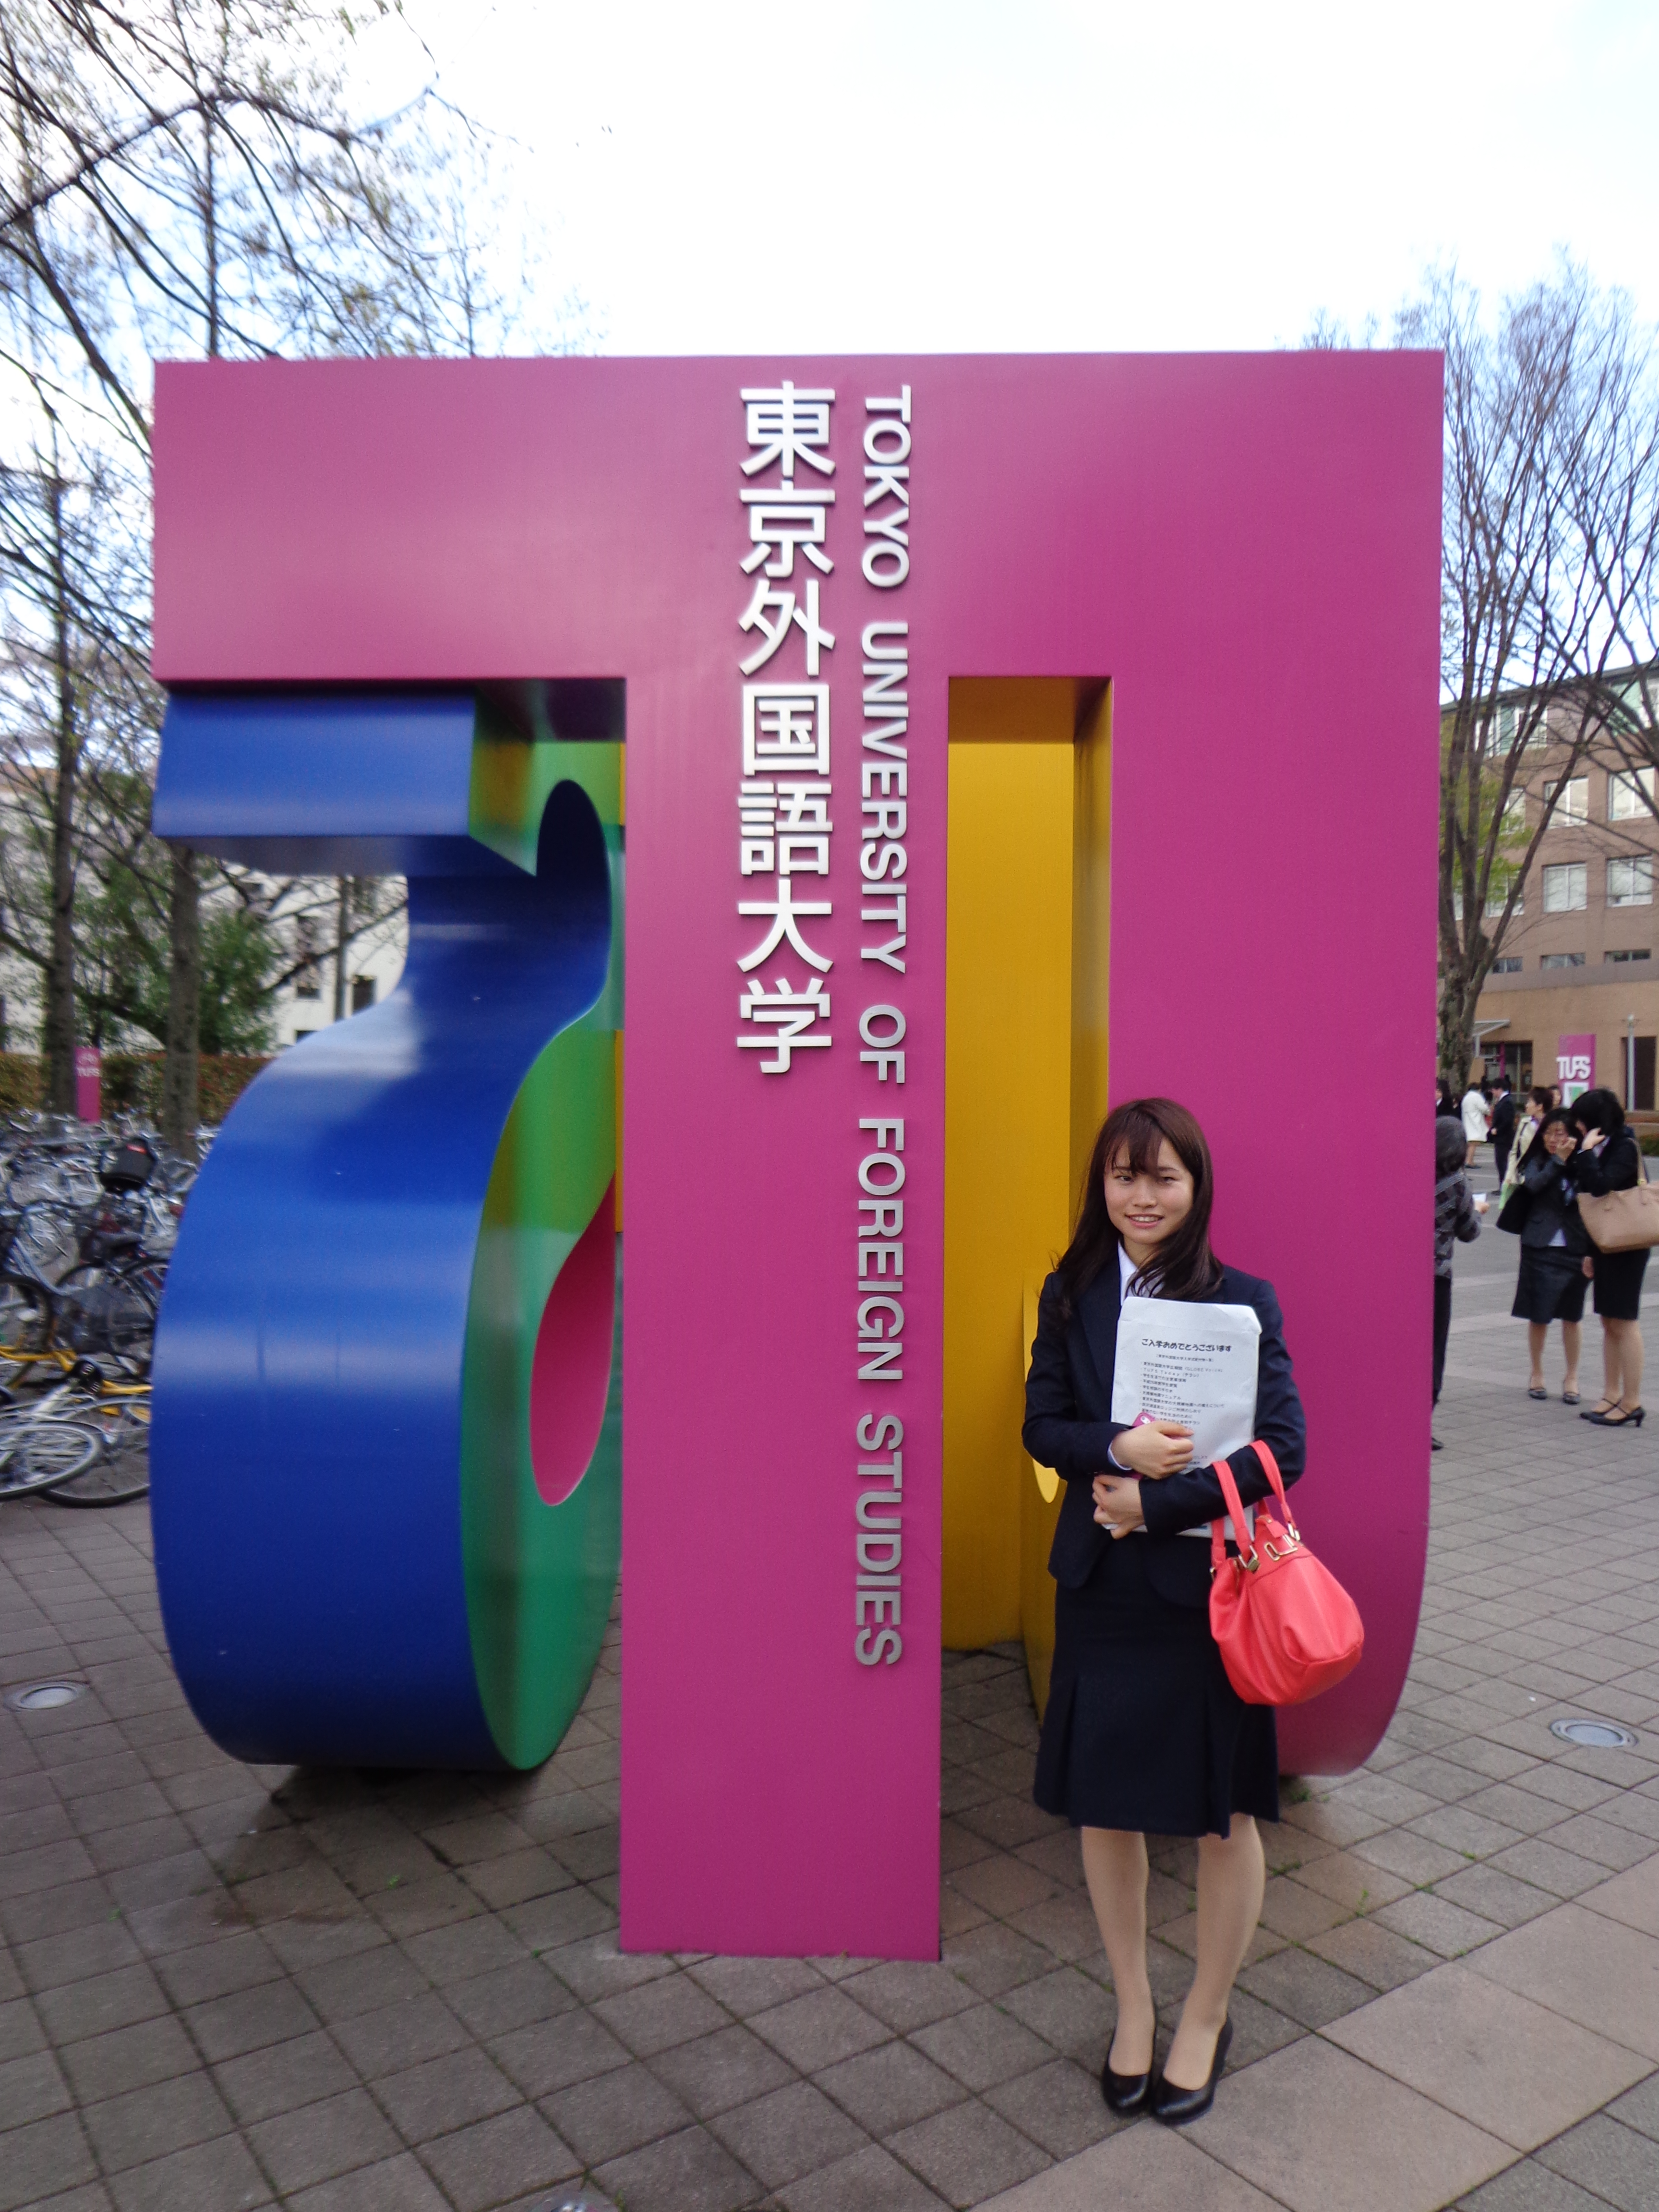 Yukino at Tokyo University of Foreign Languages.